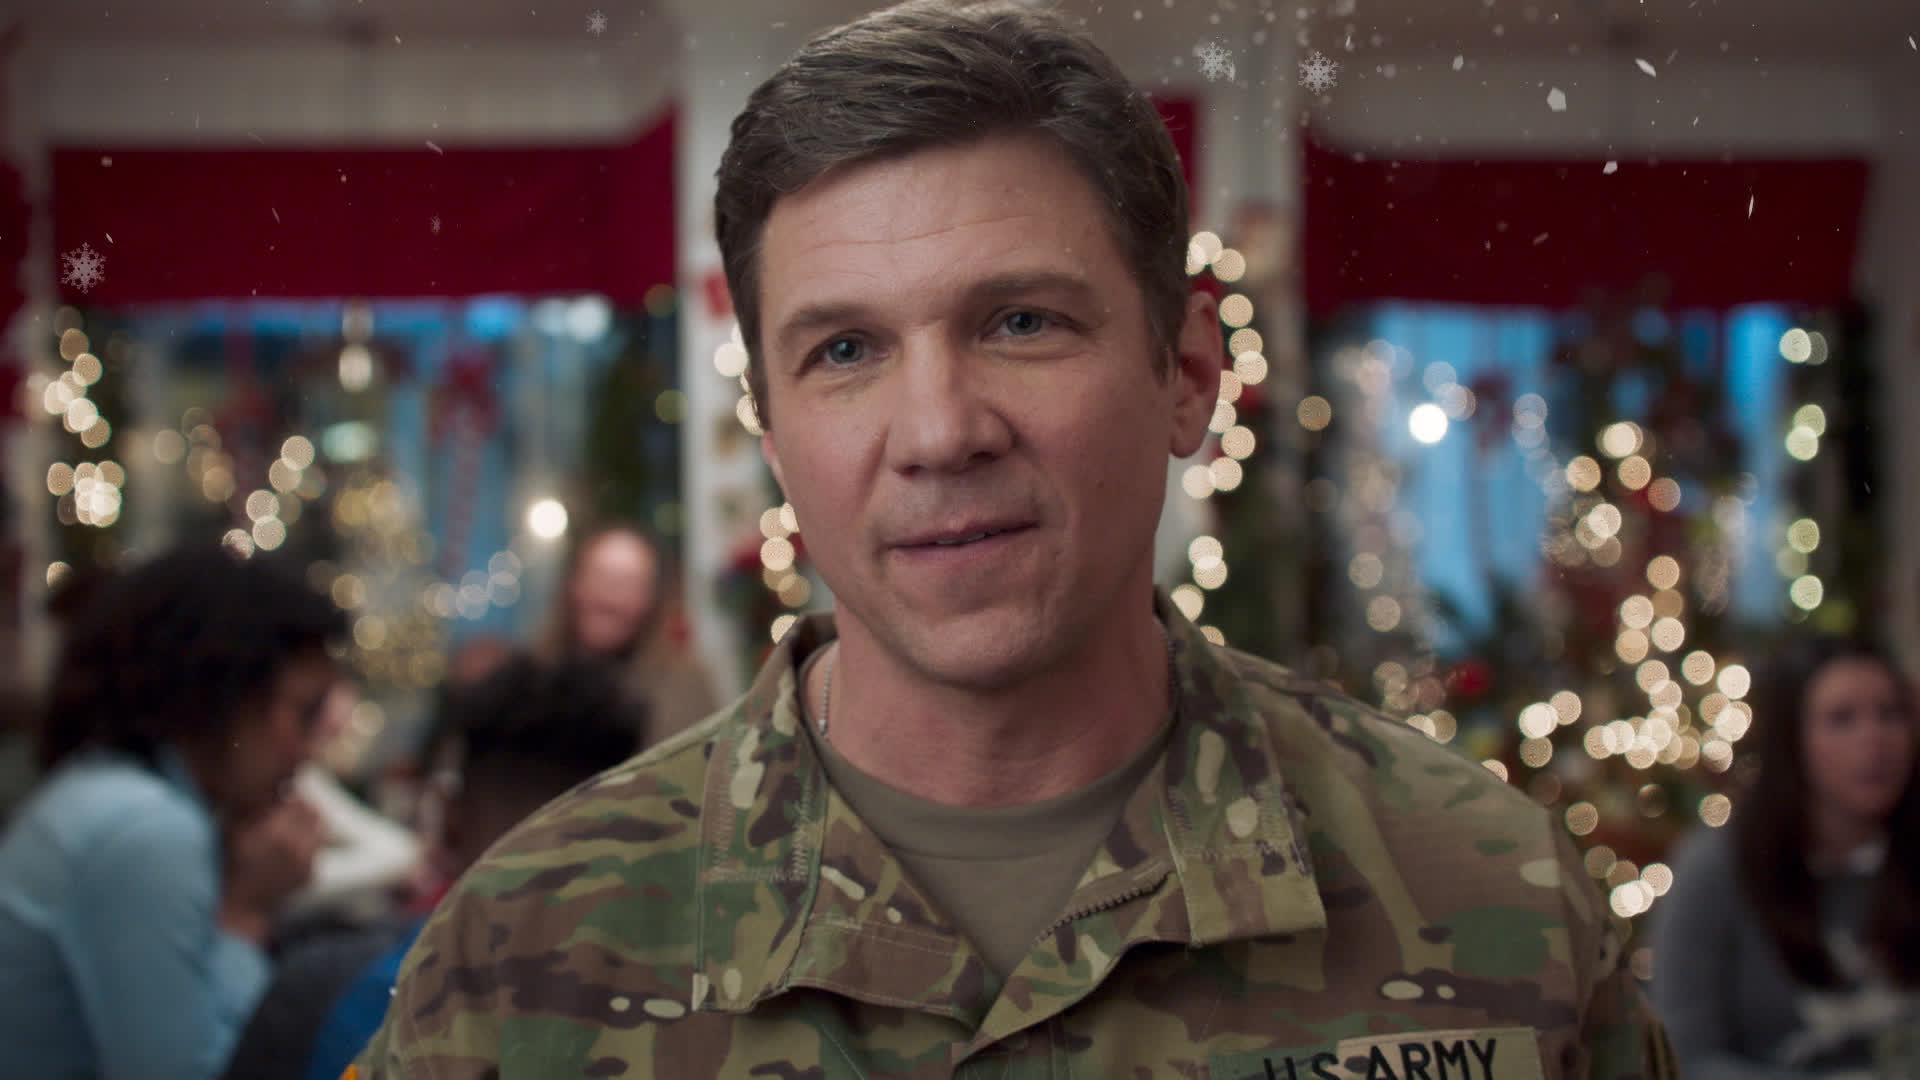 a US soldier in uniform as part of a Hallmark movie